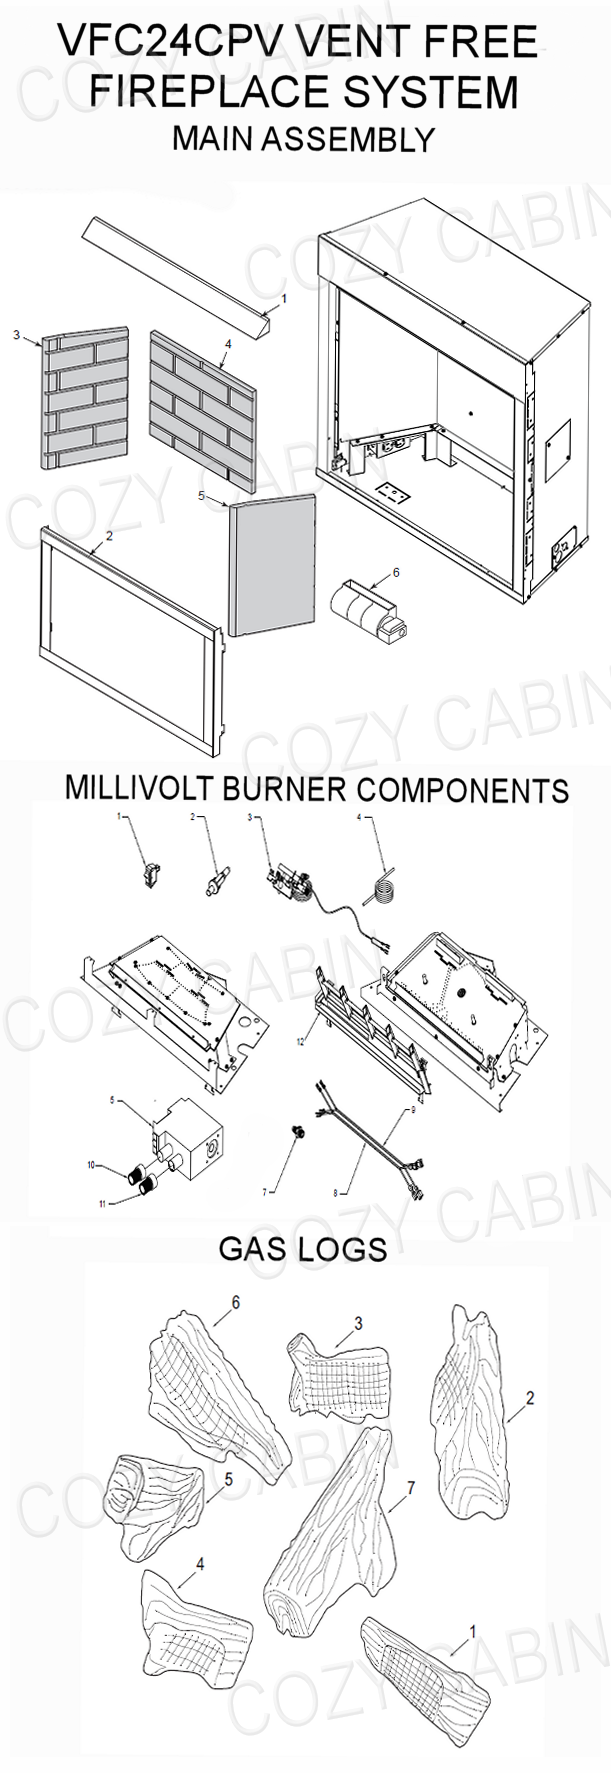 Monessen Vent Free LP Gas Fireplace System with Millivolt Burner (VFC24CPV) #VFC24CPV